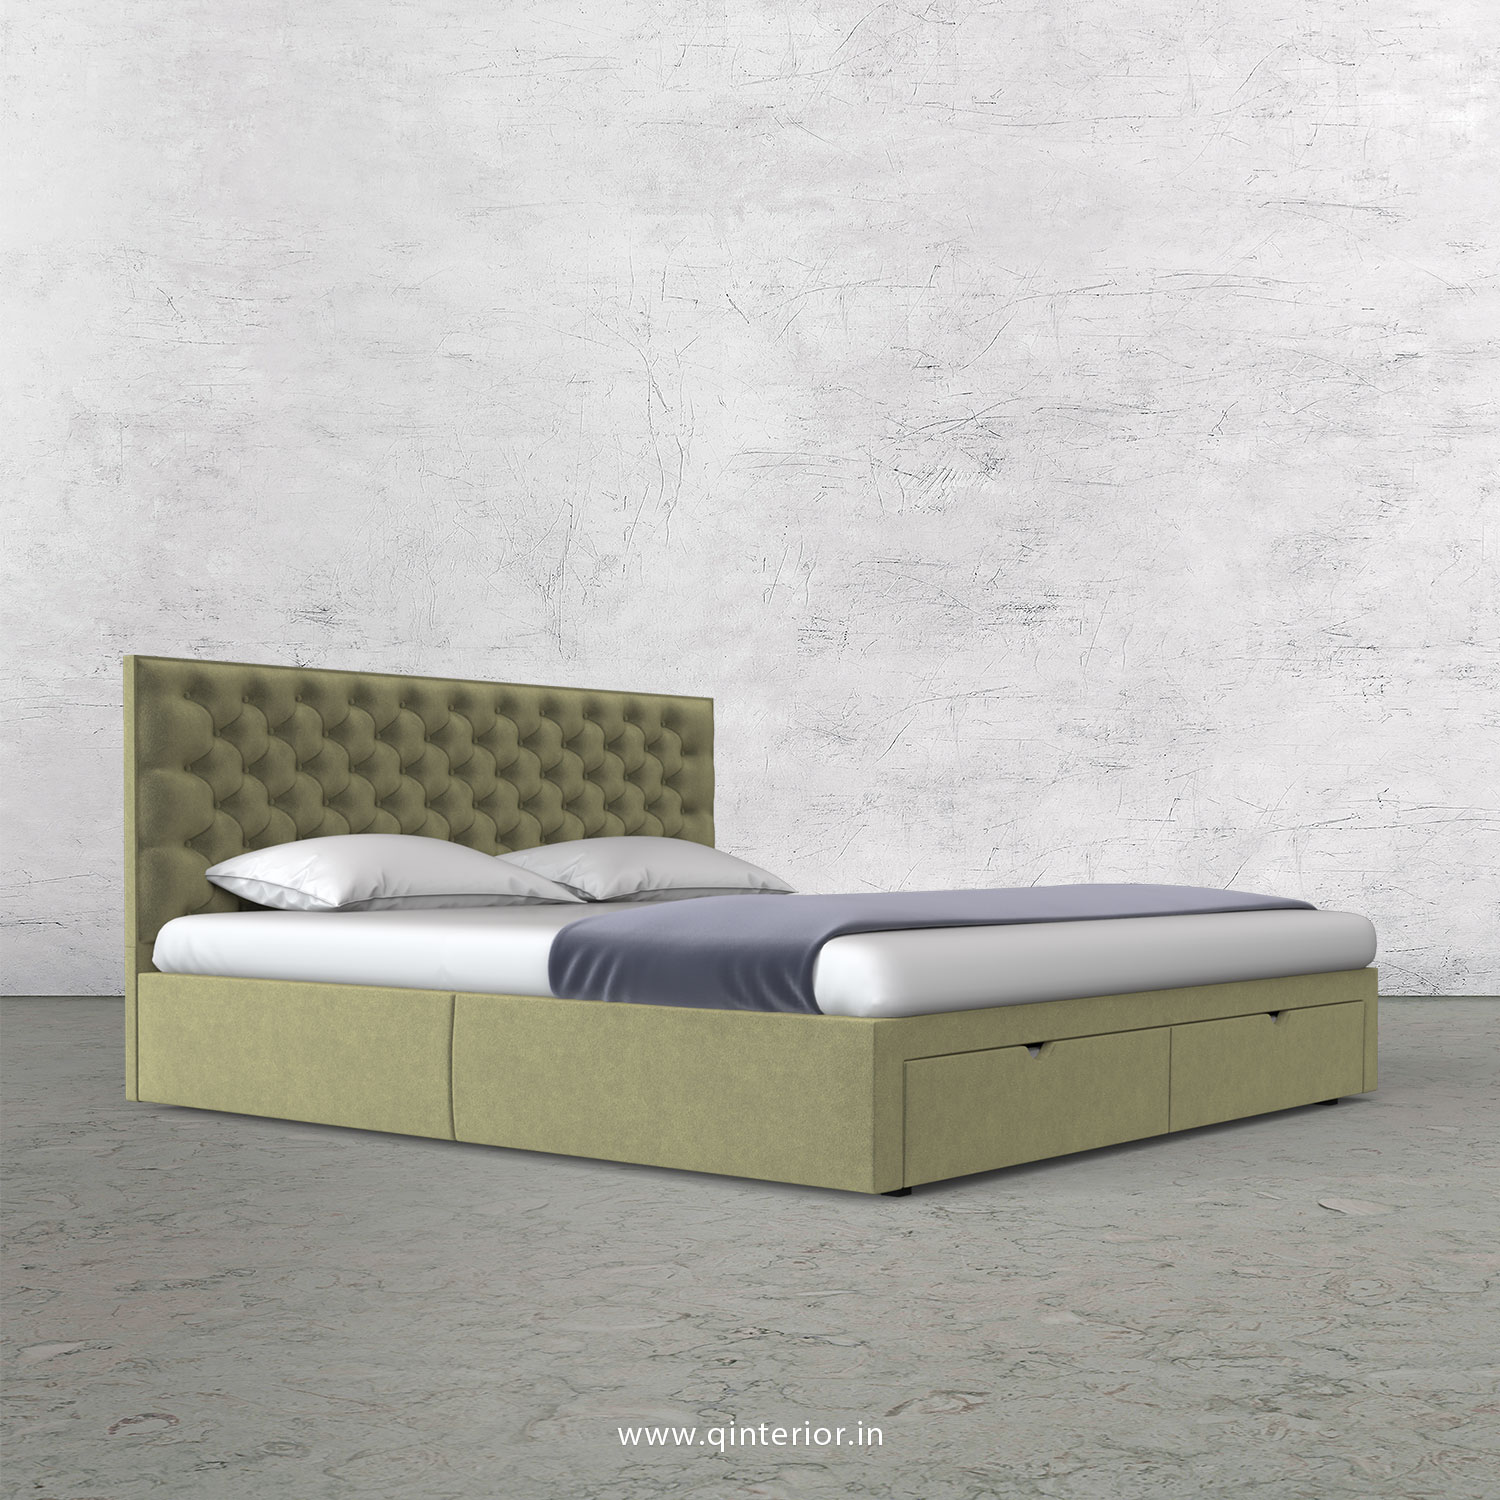 Orion King Size Storage Bed in Velvet Fabric - KBD001 VL04